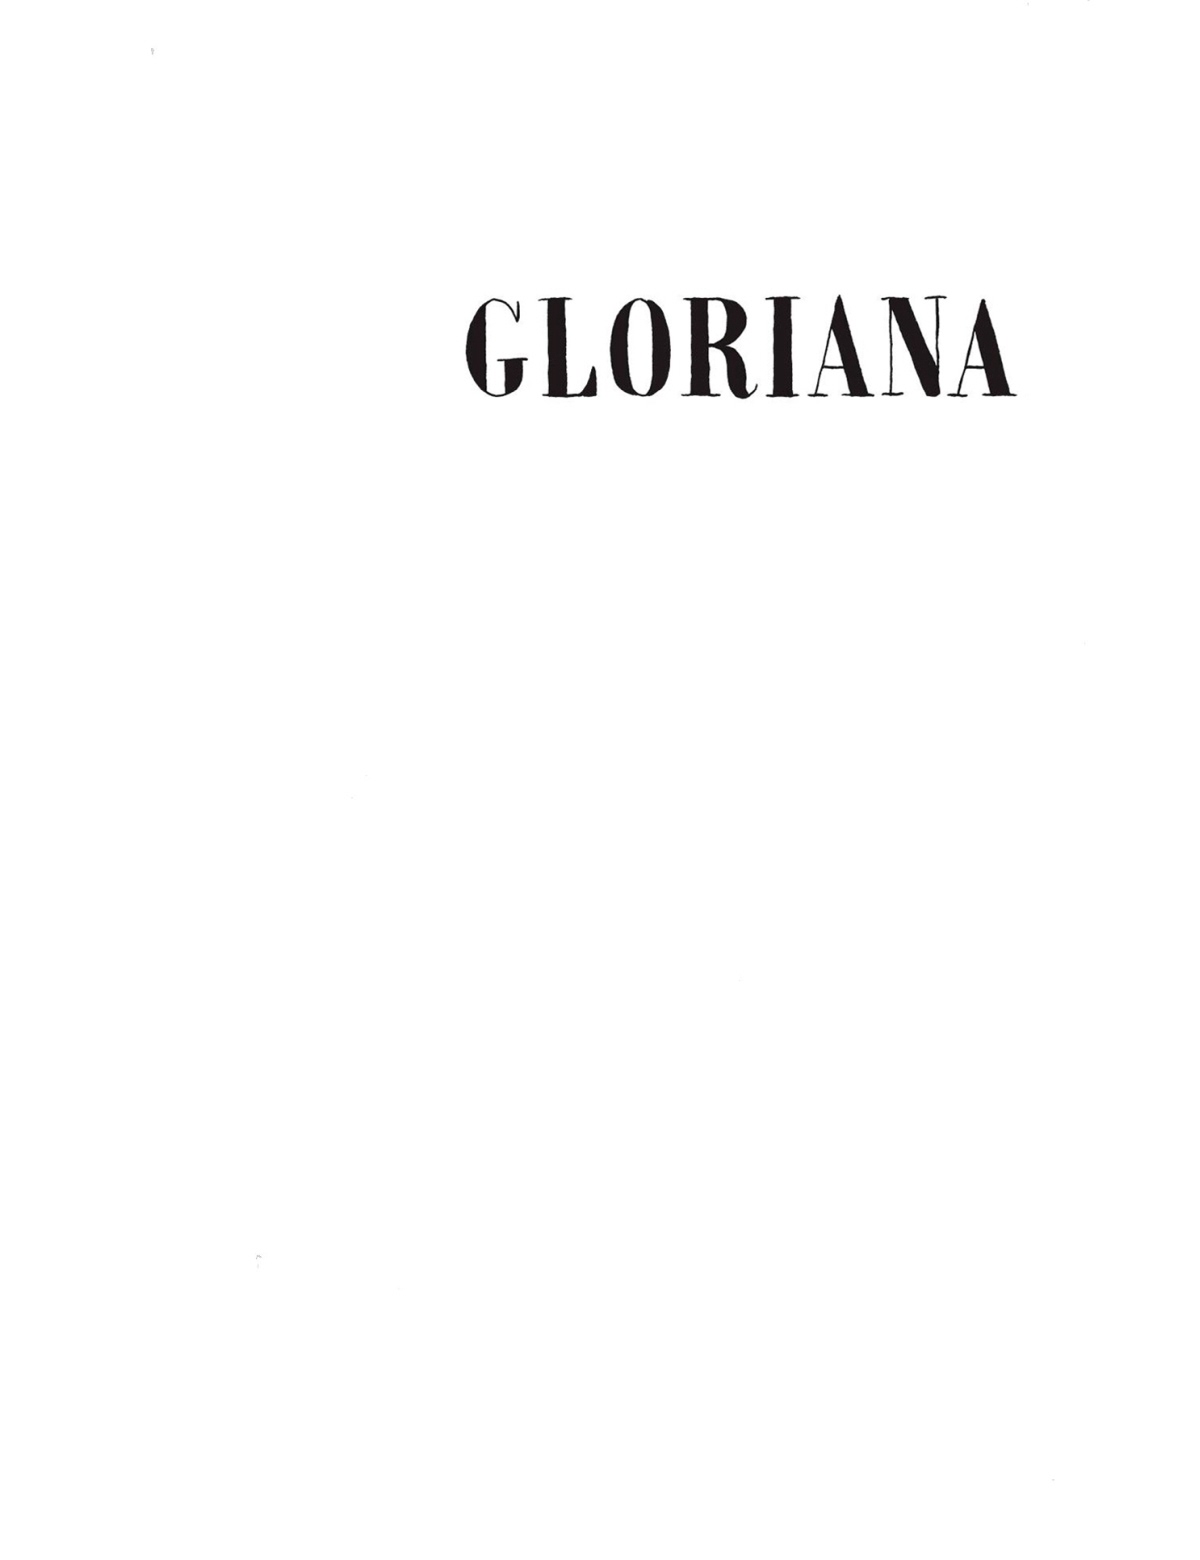 Read online Gloriana comic -  Issue # TPB - 4